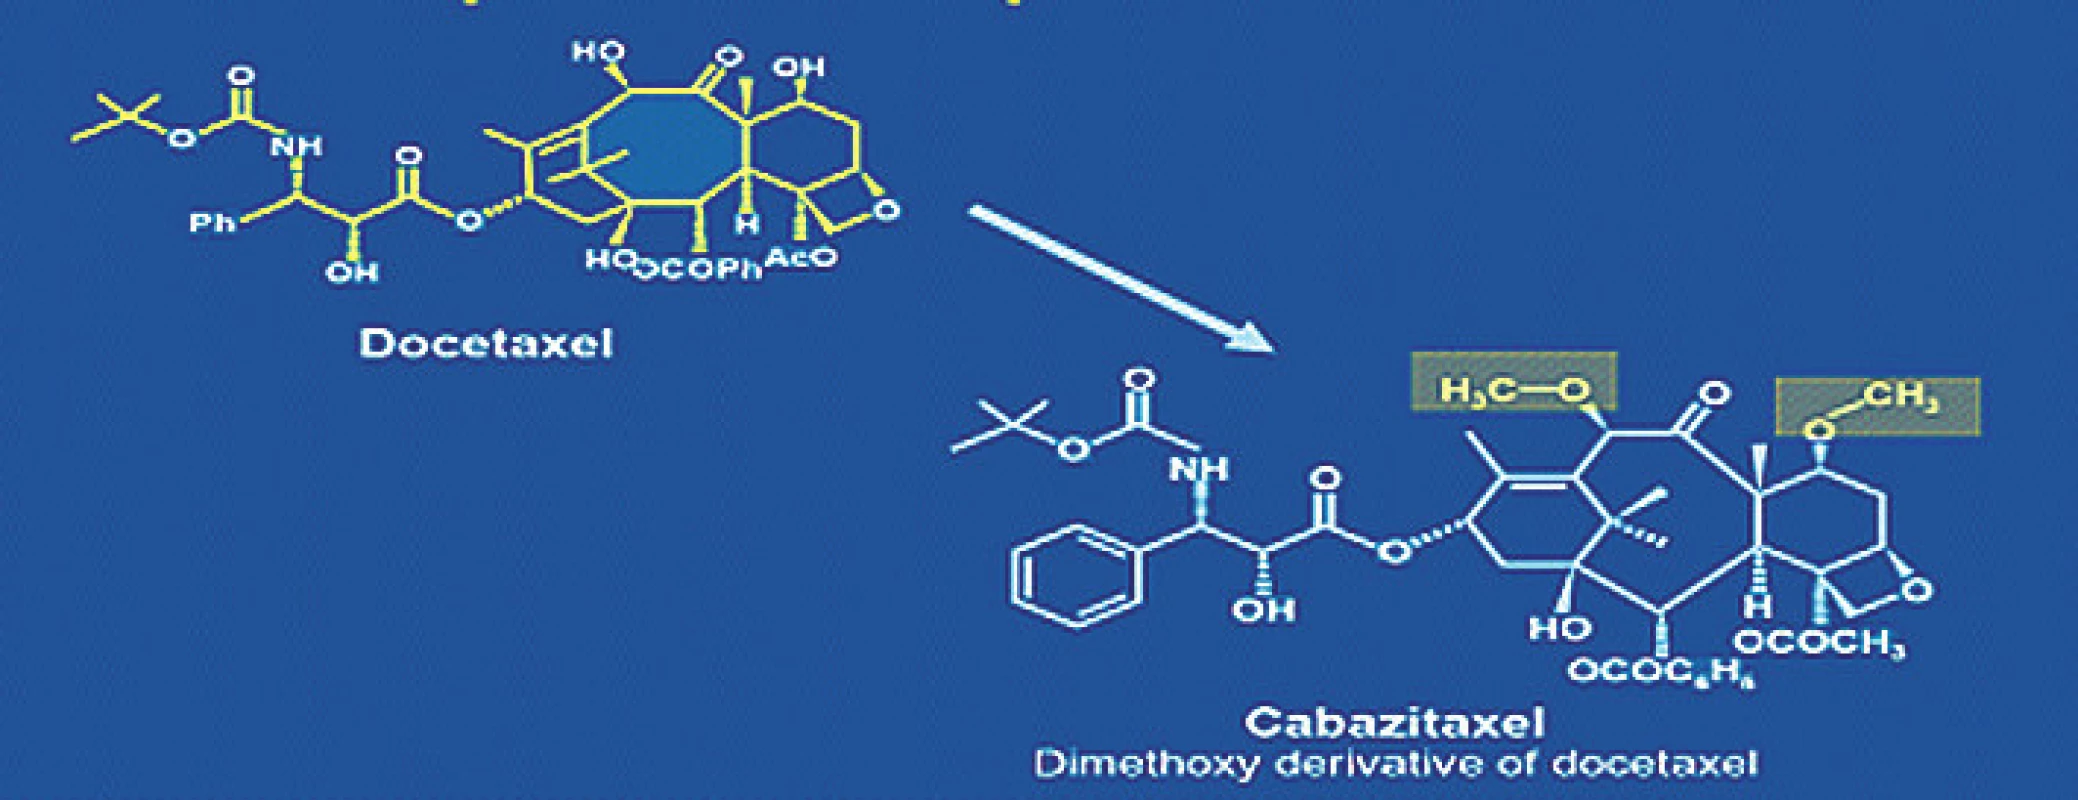 Chemická struktura docetaxelu a kabazitaxelu
Fig. 3. Docetaxel and cabazitaxel chemical structure 